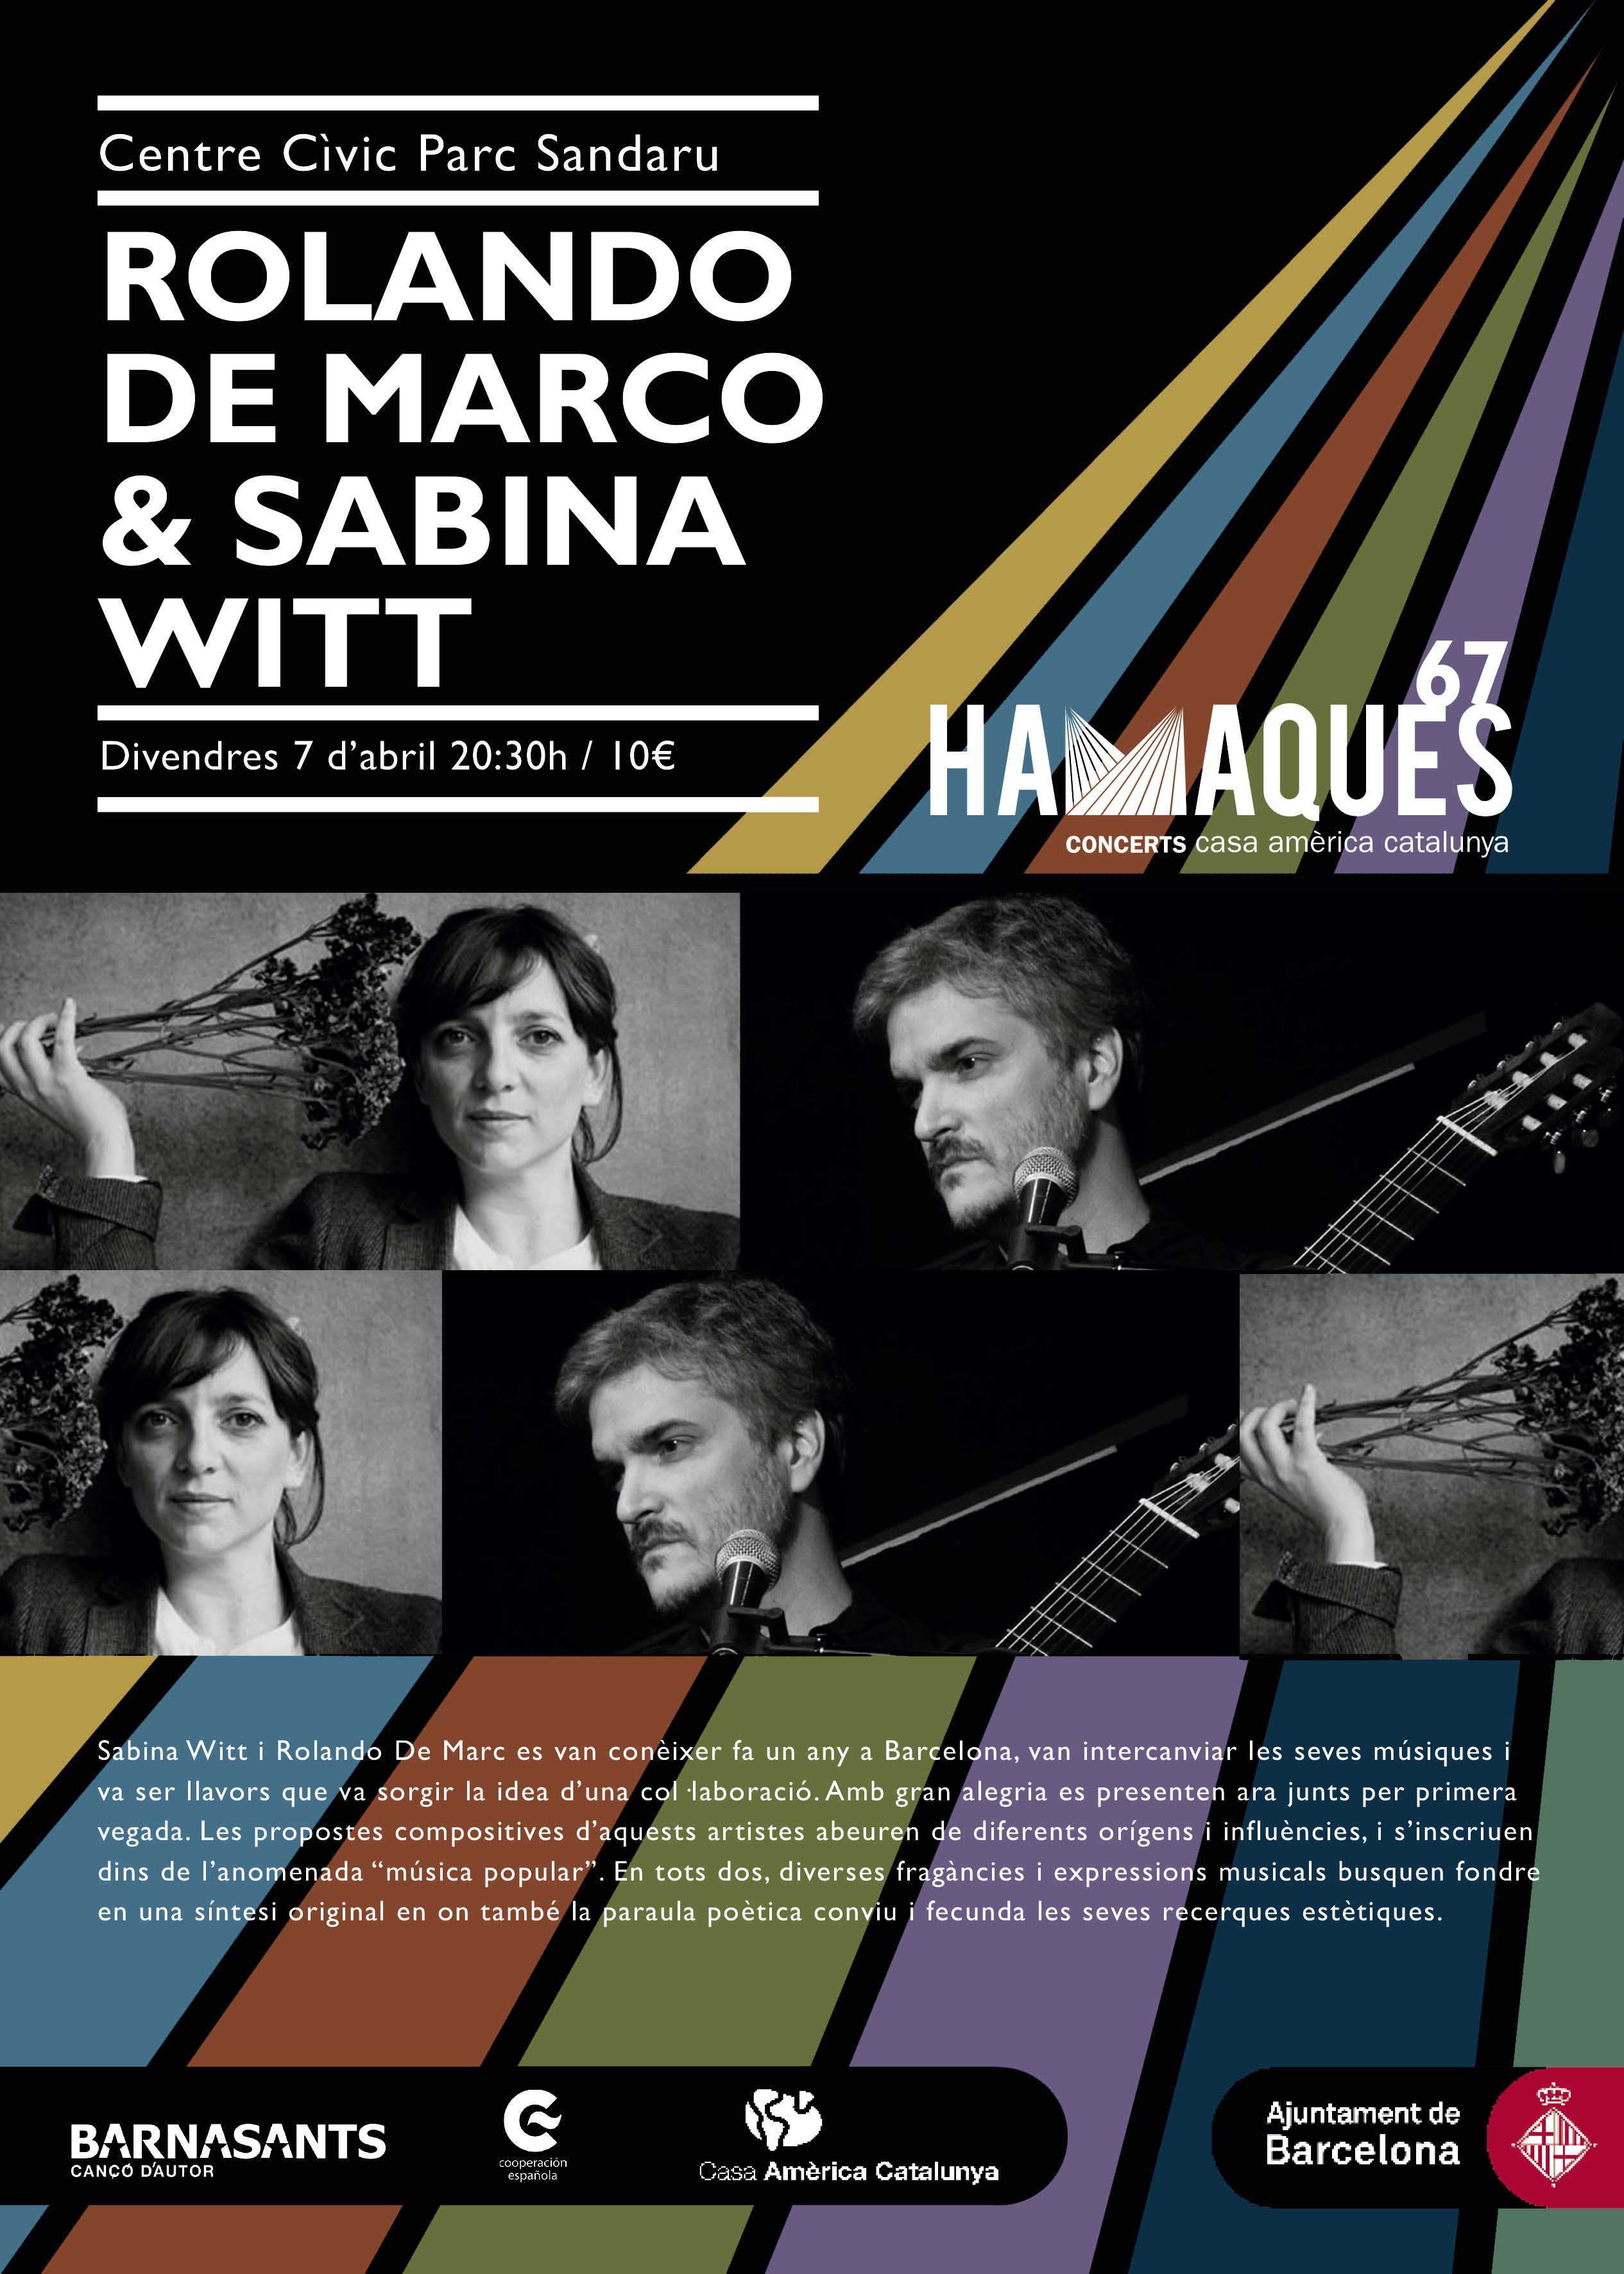 7 DE ABRIL· Festival Hamaques-Barnasants· Sabina Witt & Manel Fortià «Crisàlides». 20:30h